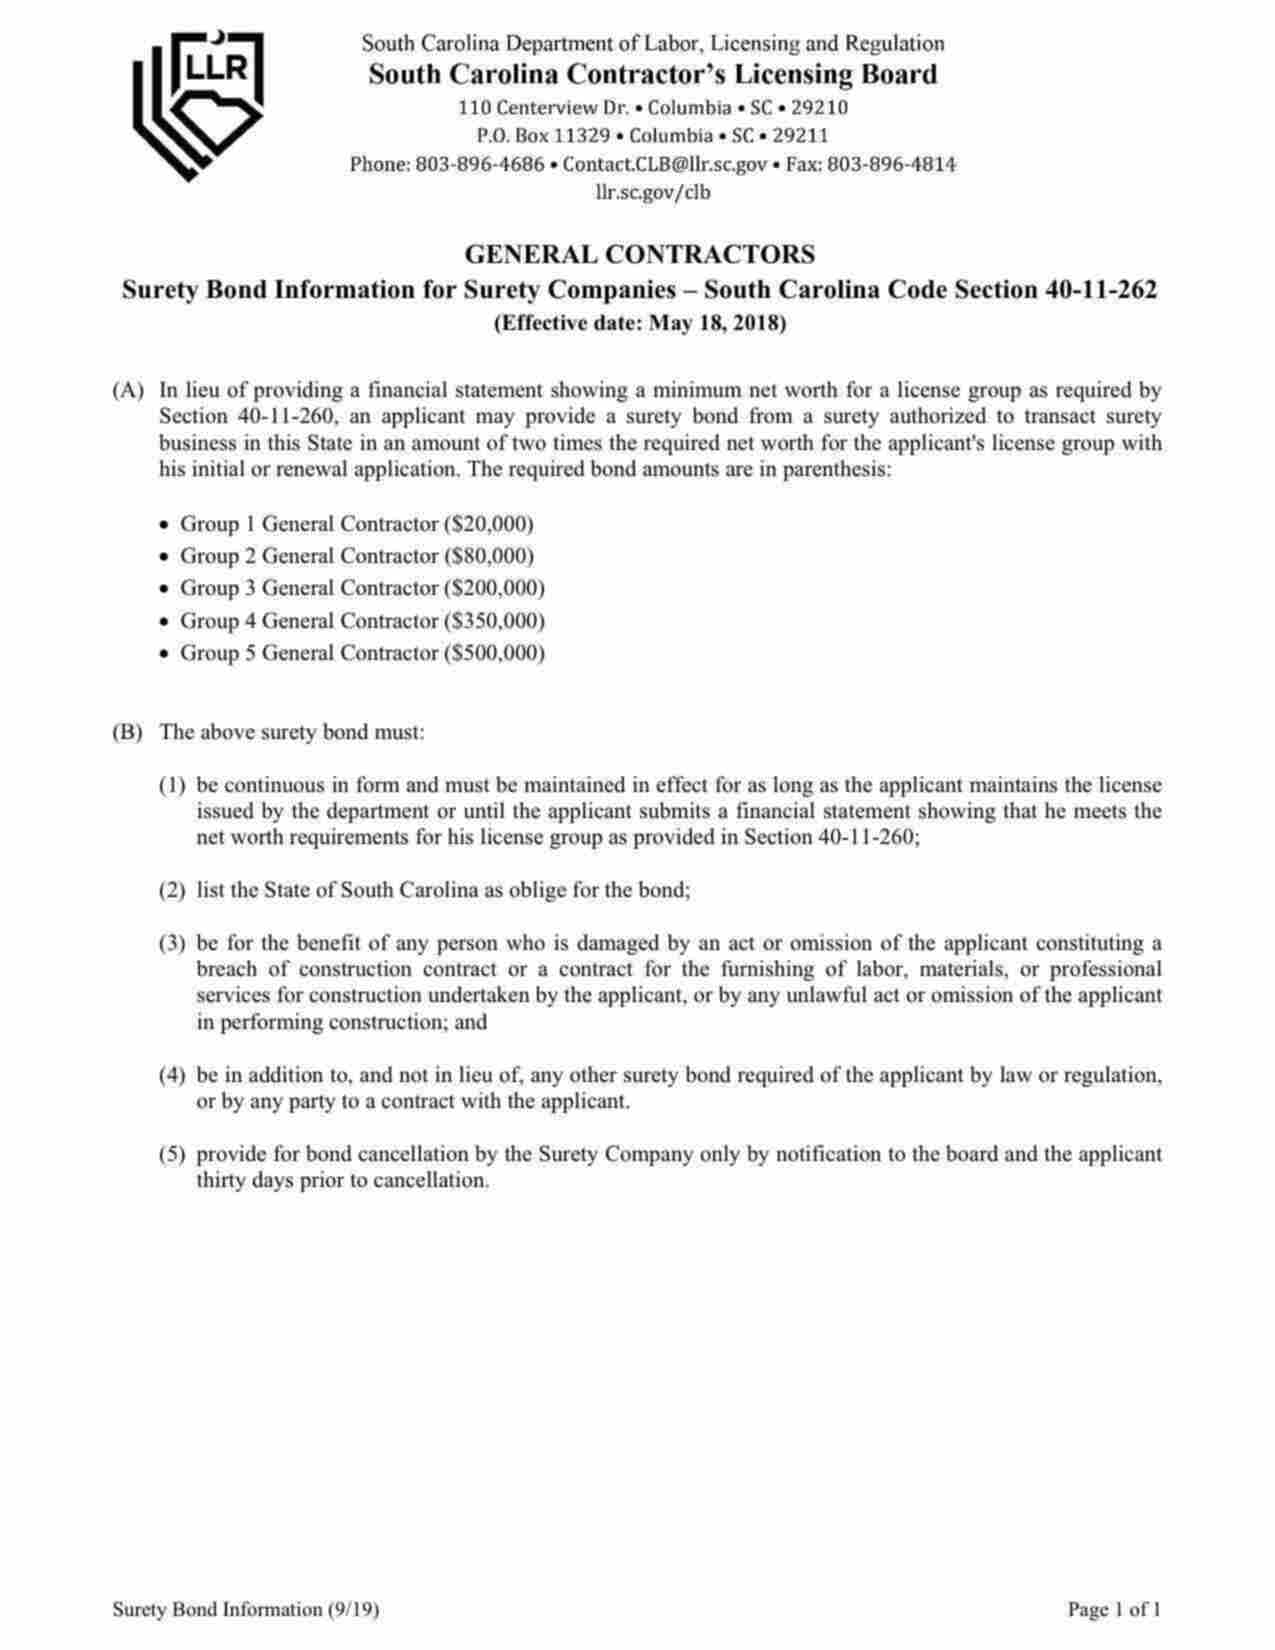 South Carolina General Contractor (Group 5) Bond Form